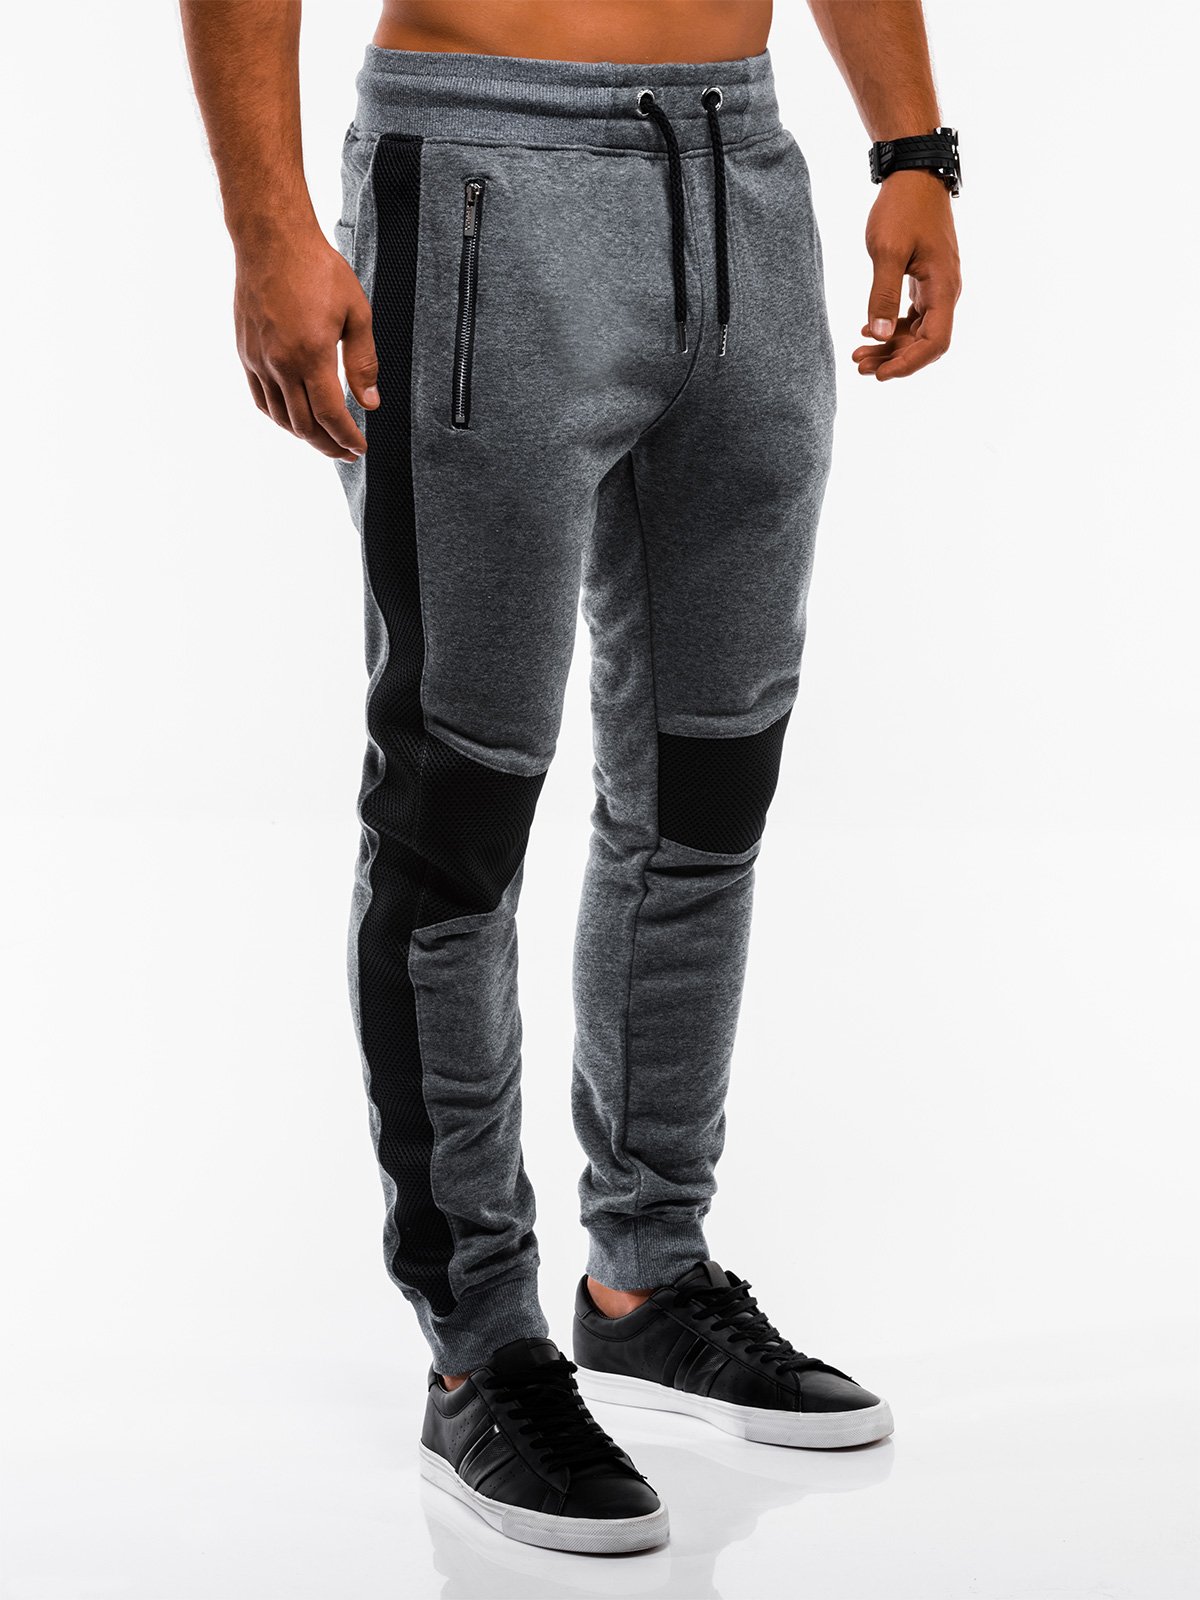 Men's sweatpants P425 - dark grey | MODONE wholesale - Clothing For Men